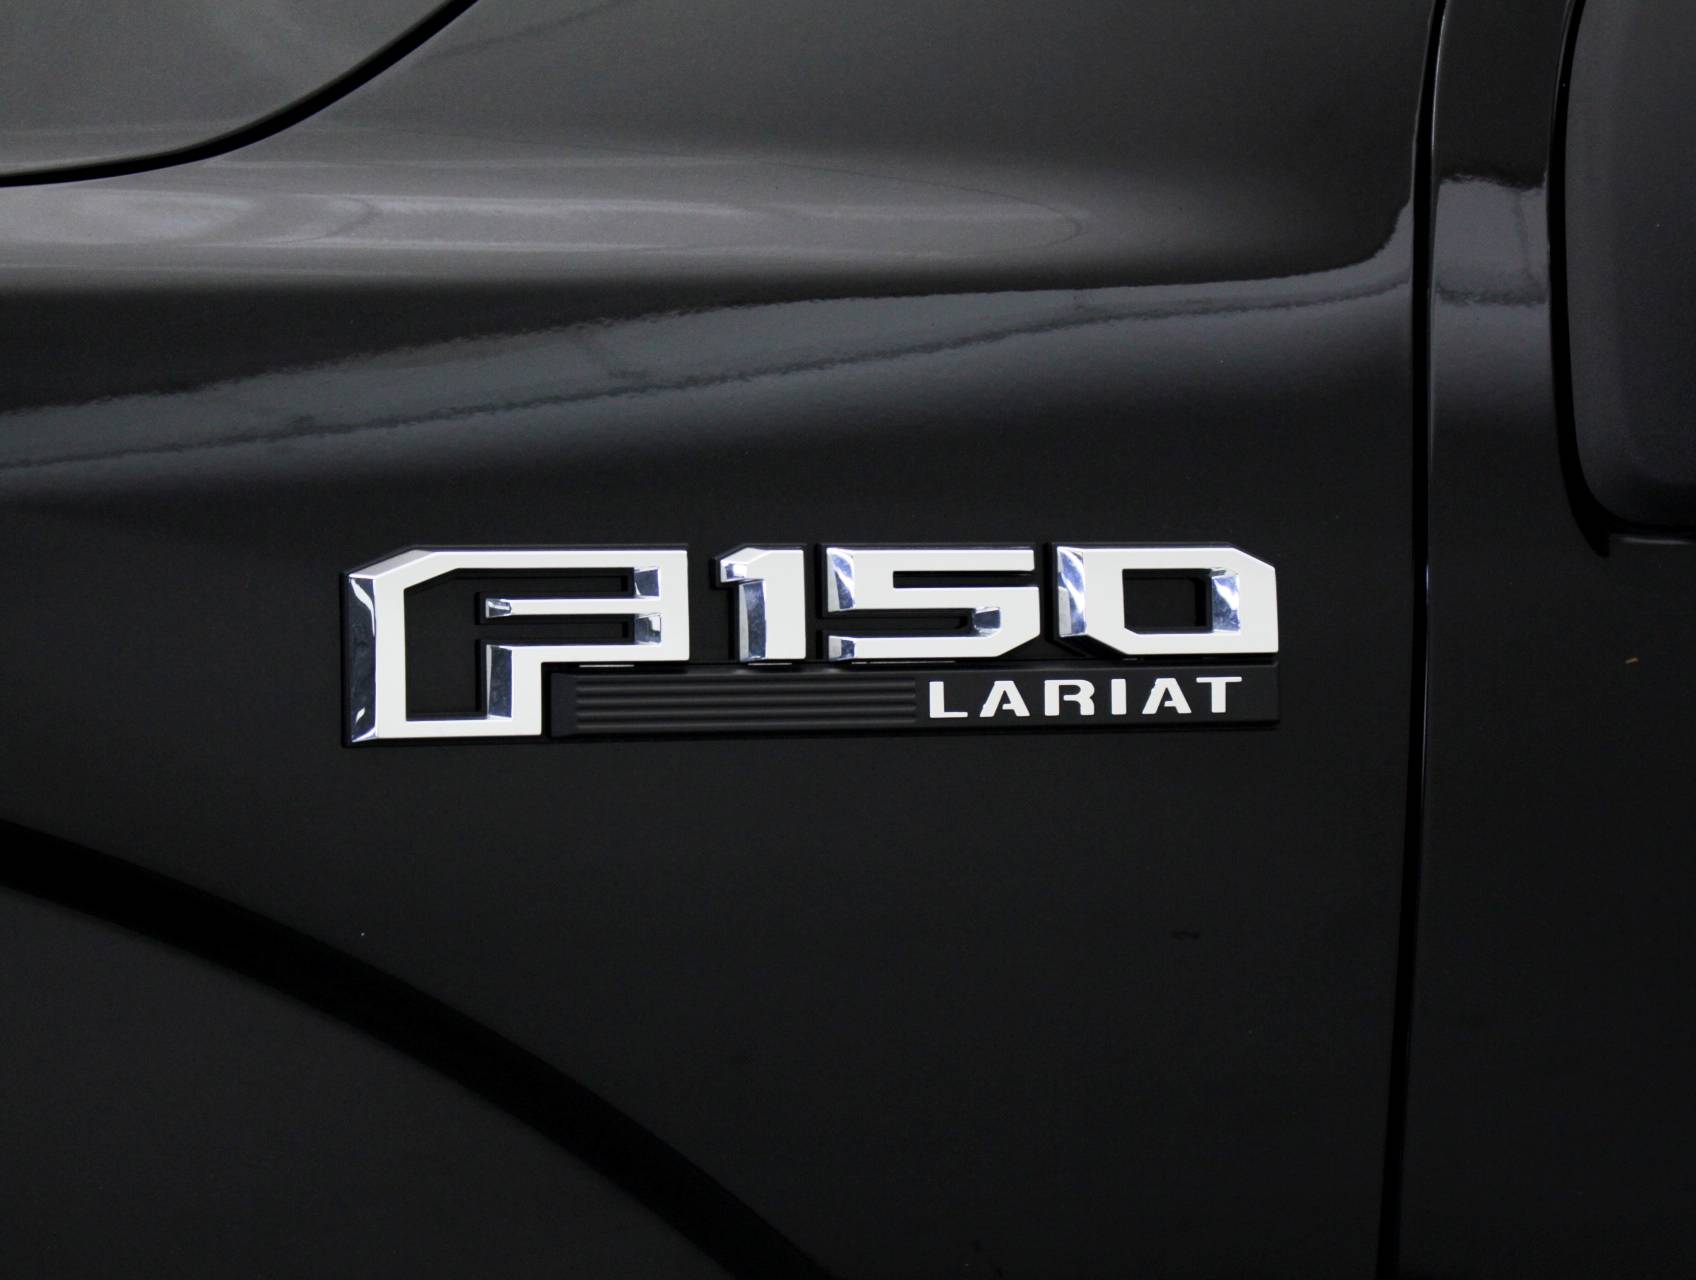 Florida Fine Cars - Used FORD F 150 2015 MIAMI Lariat